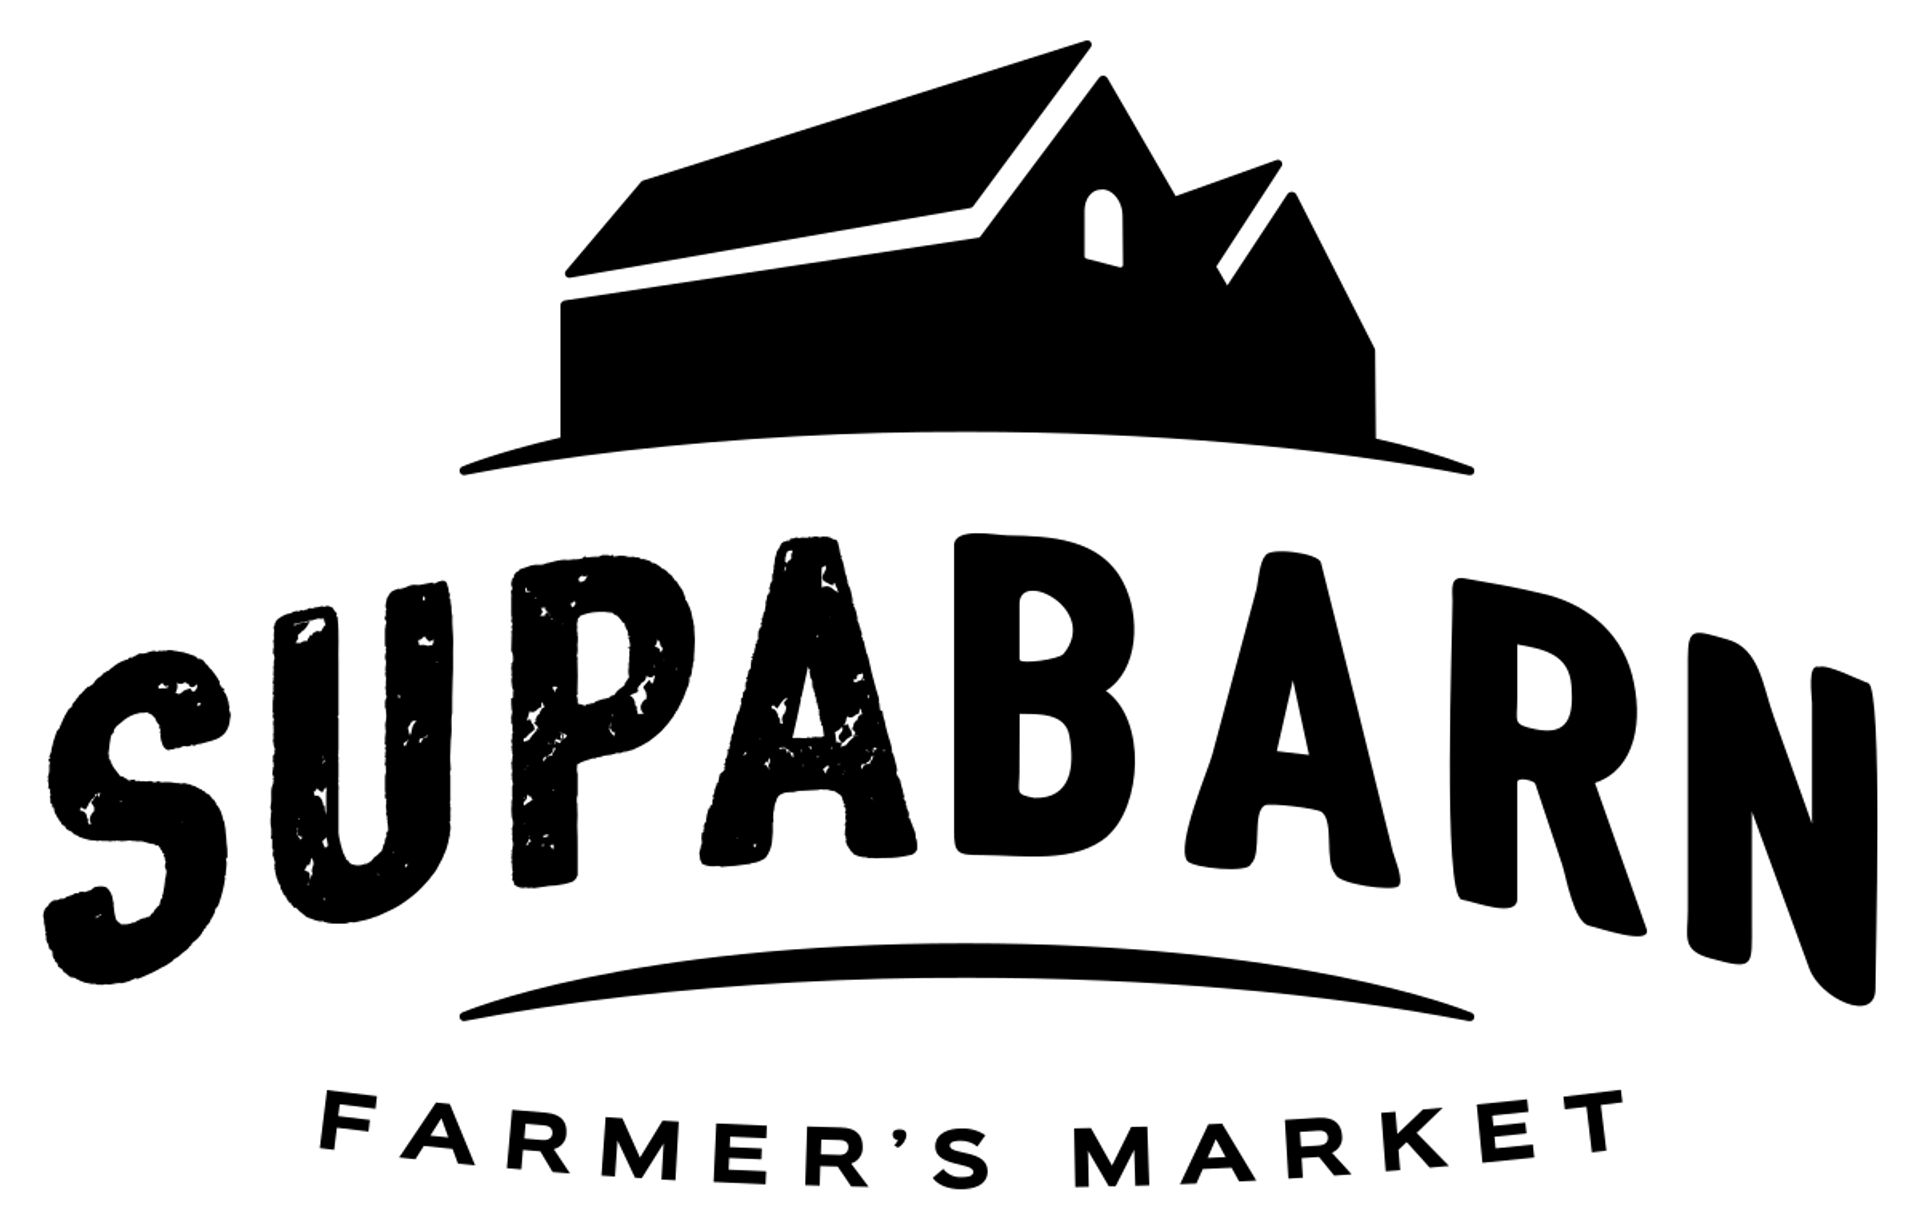 SUPABARN logo of current catalogue